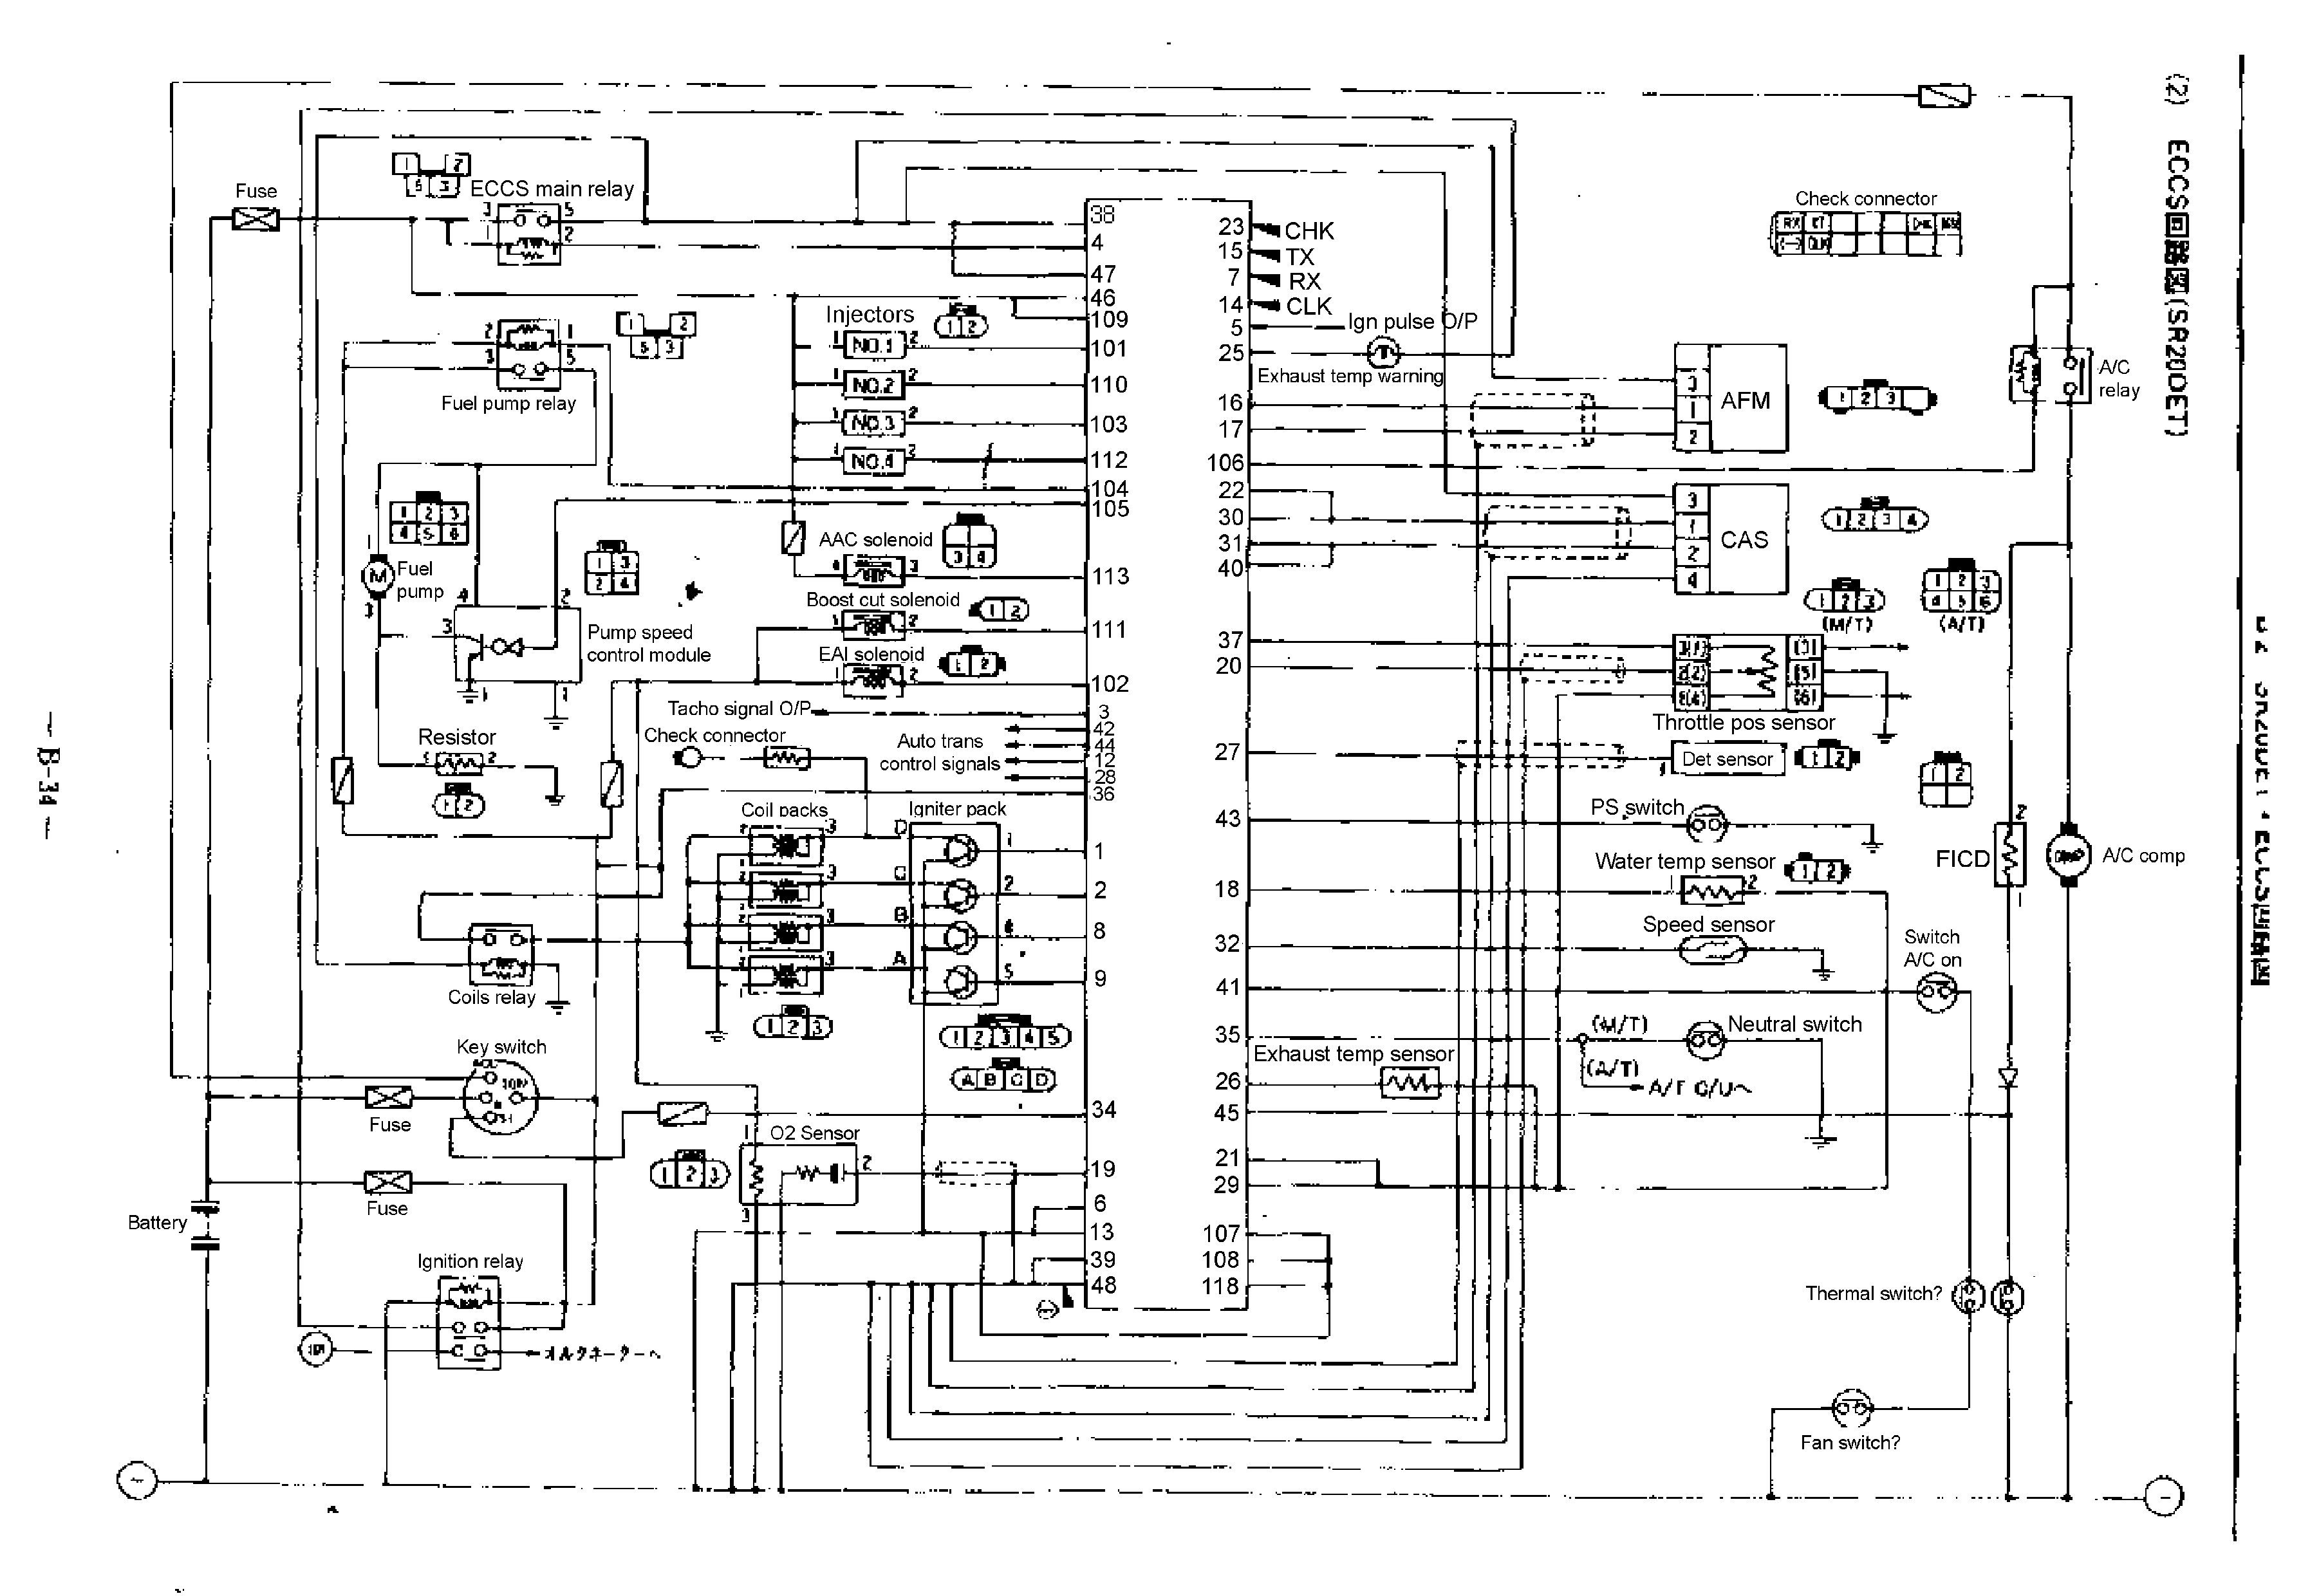 Diagram Nissan Sunny B14 Wiring Diagram Full Version Hd Quality Wiring Diagram Circutdiagram Zioprudenzio It